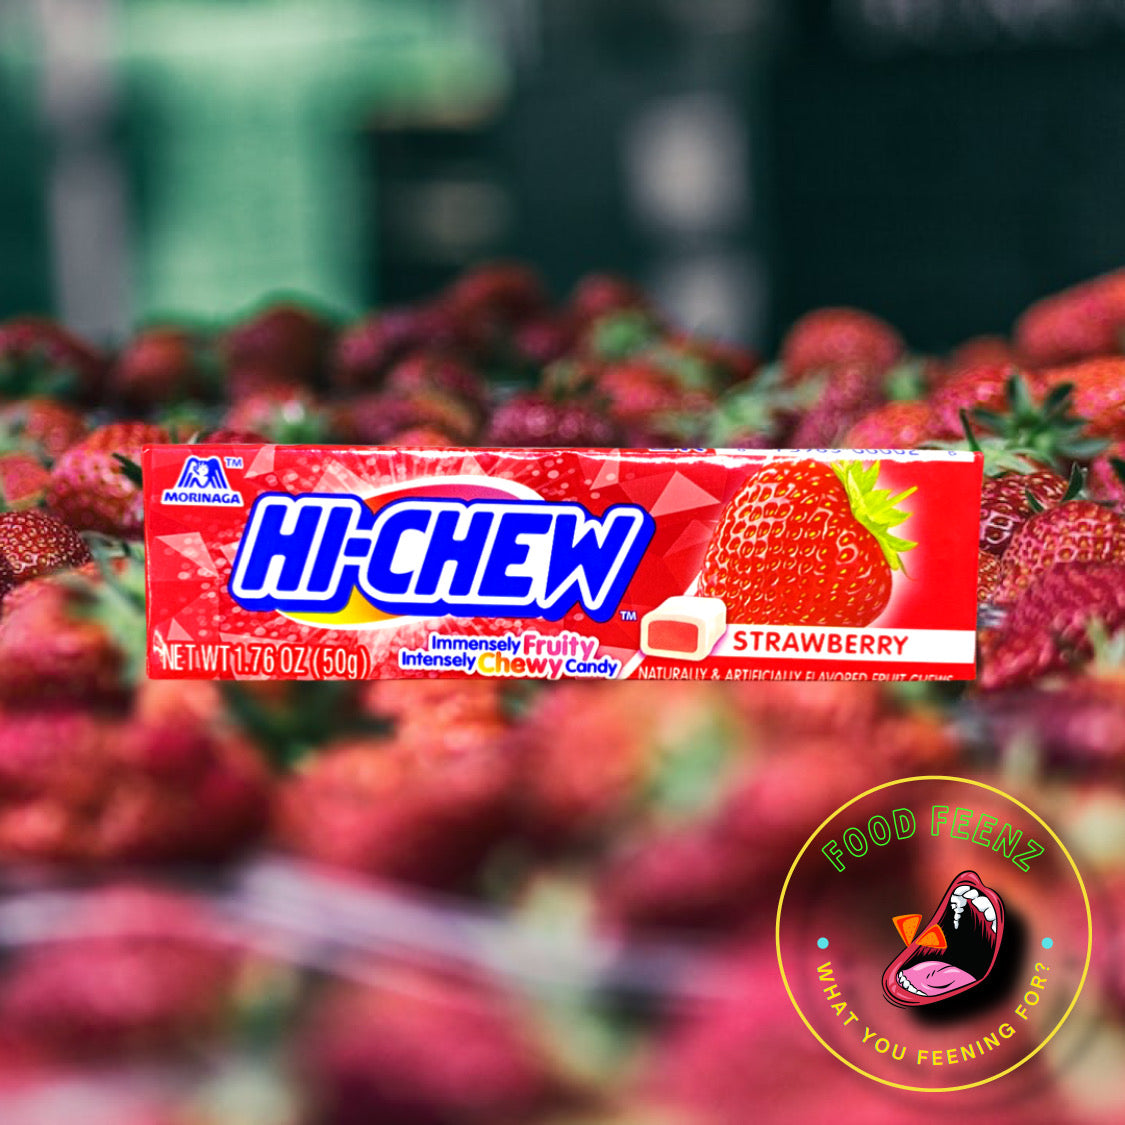 HI-CHEW Strawberry Flavor (Taiwan)